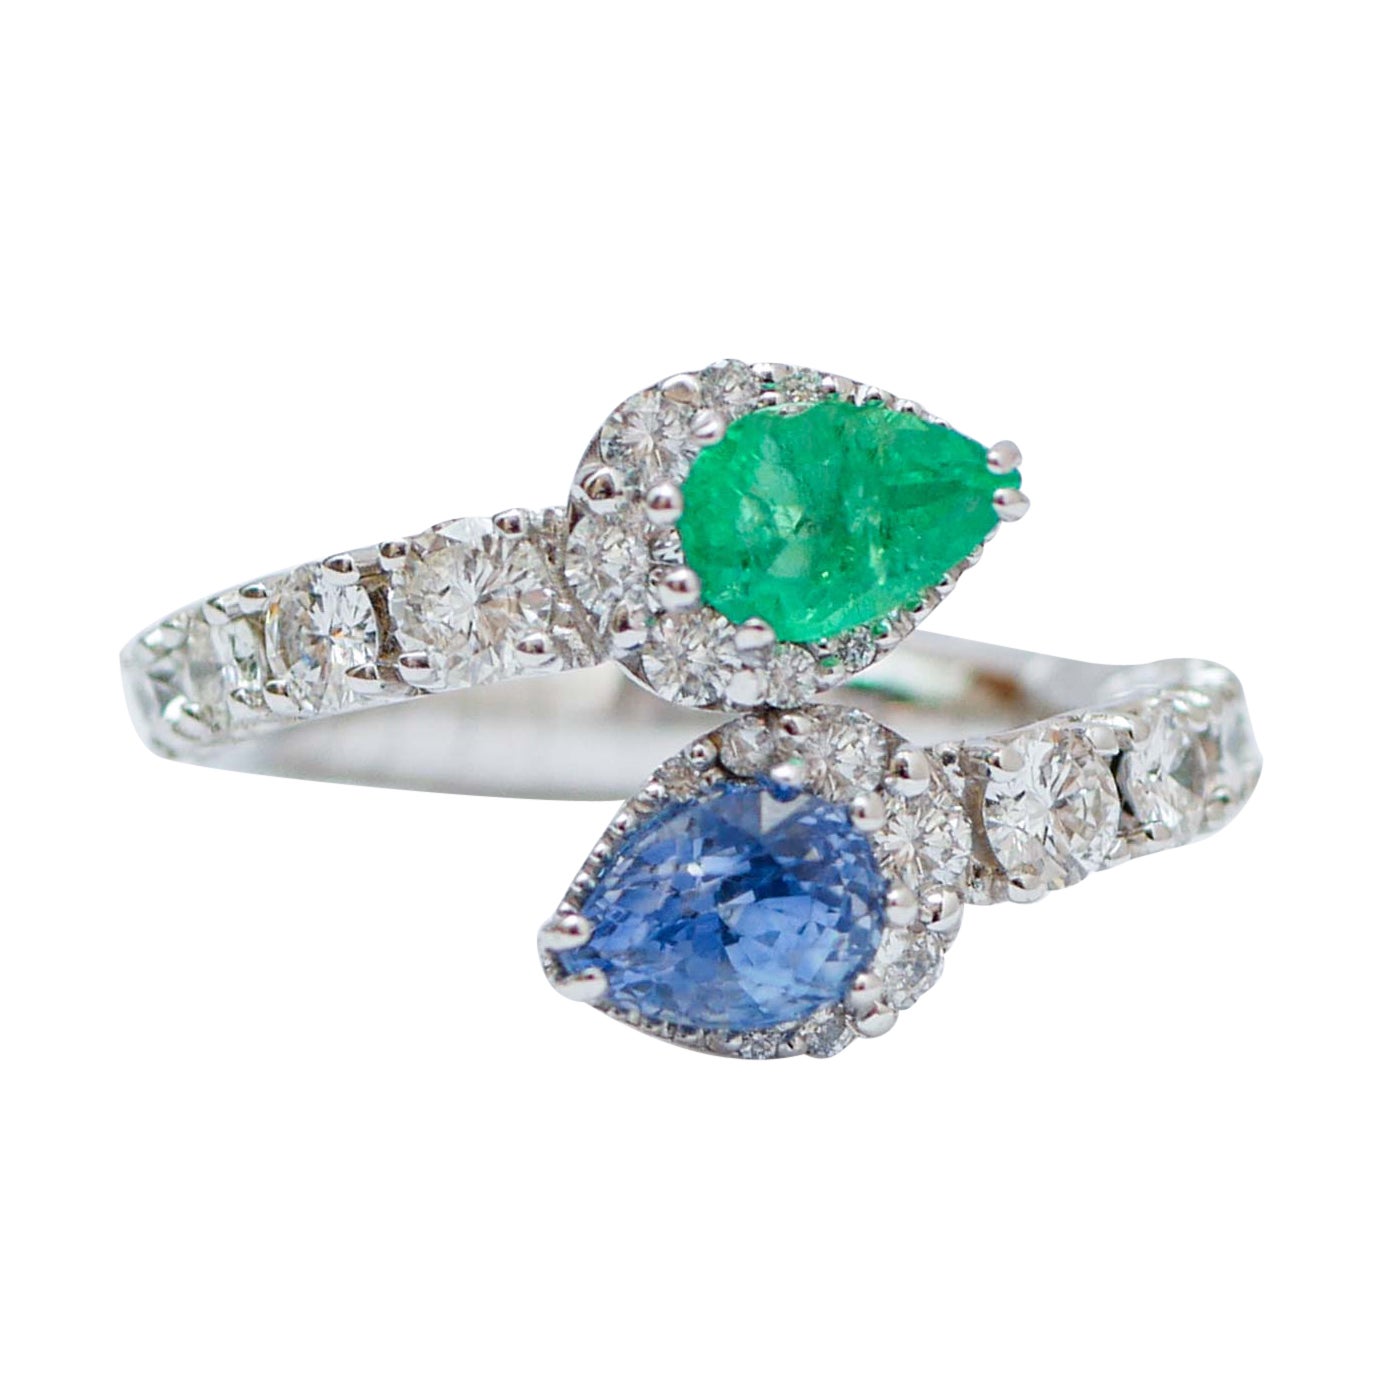 Emerald, Sapphire, Diamonds, 18 Karat White Gold Ring.